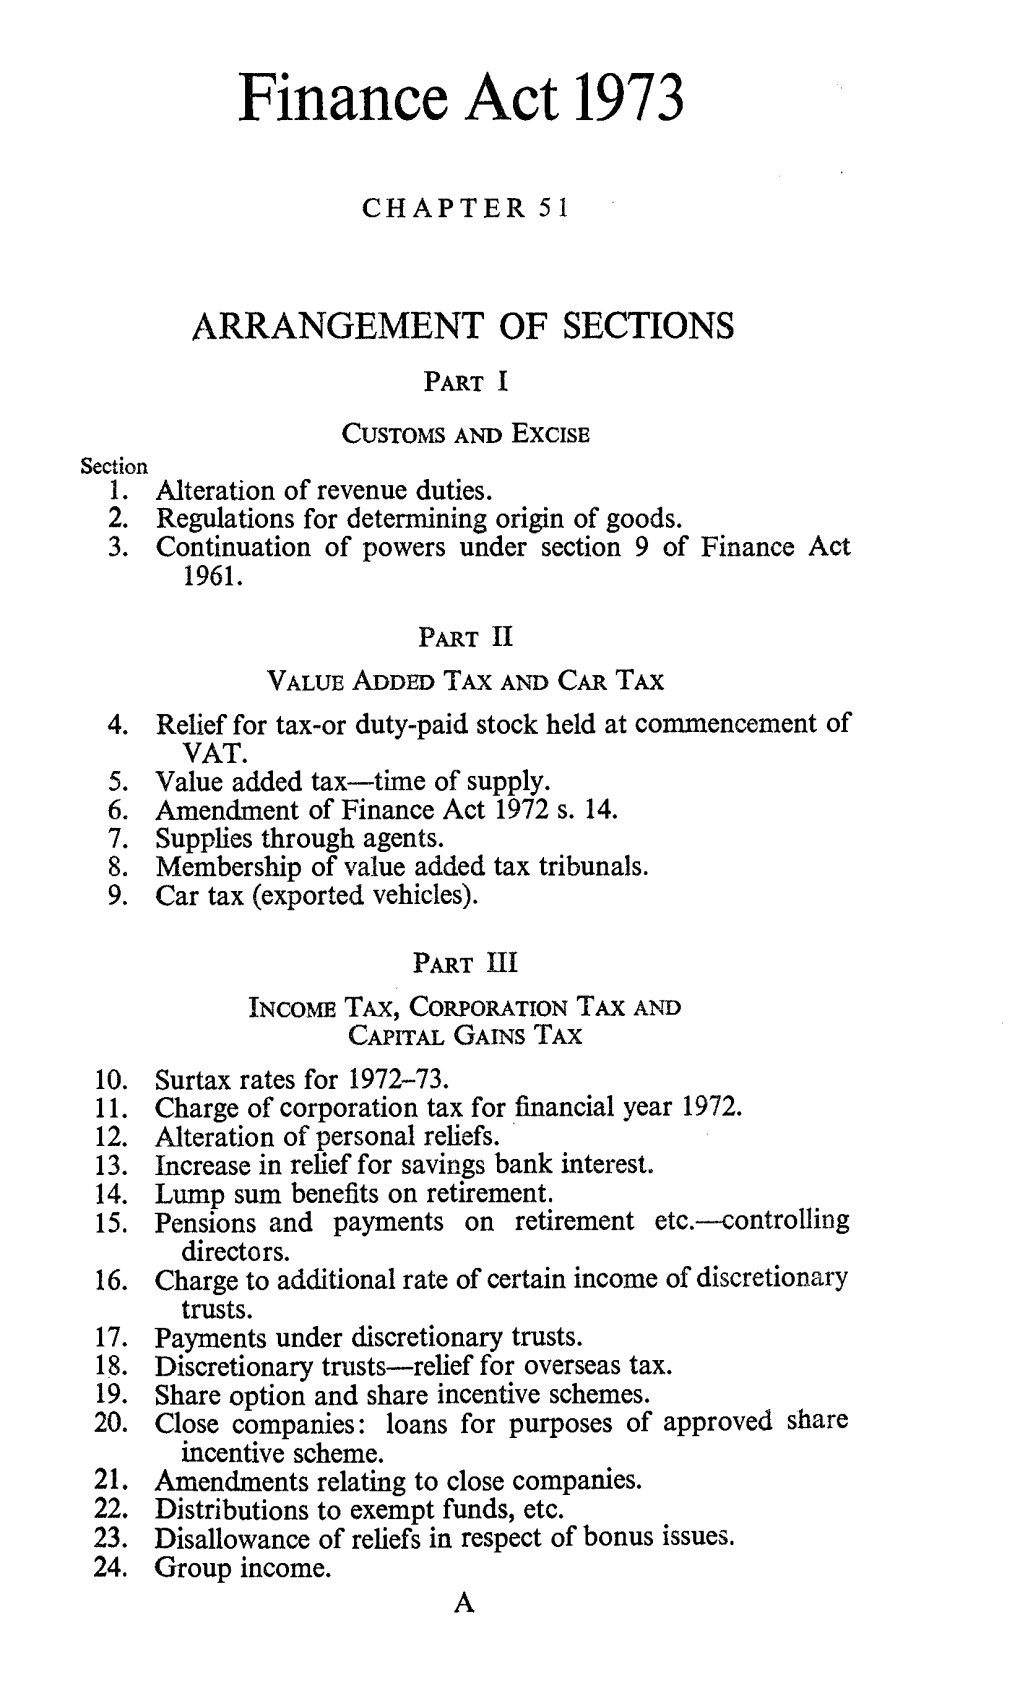 Finance Act 1973